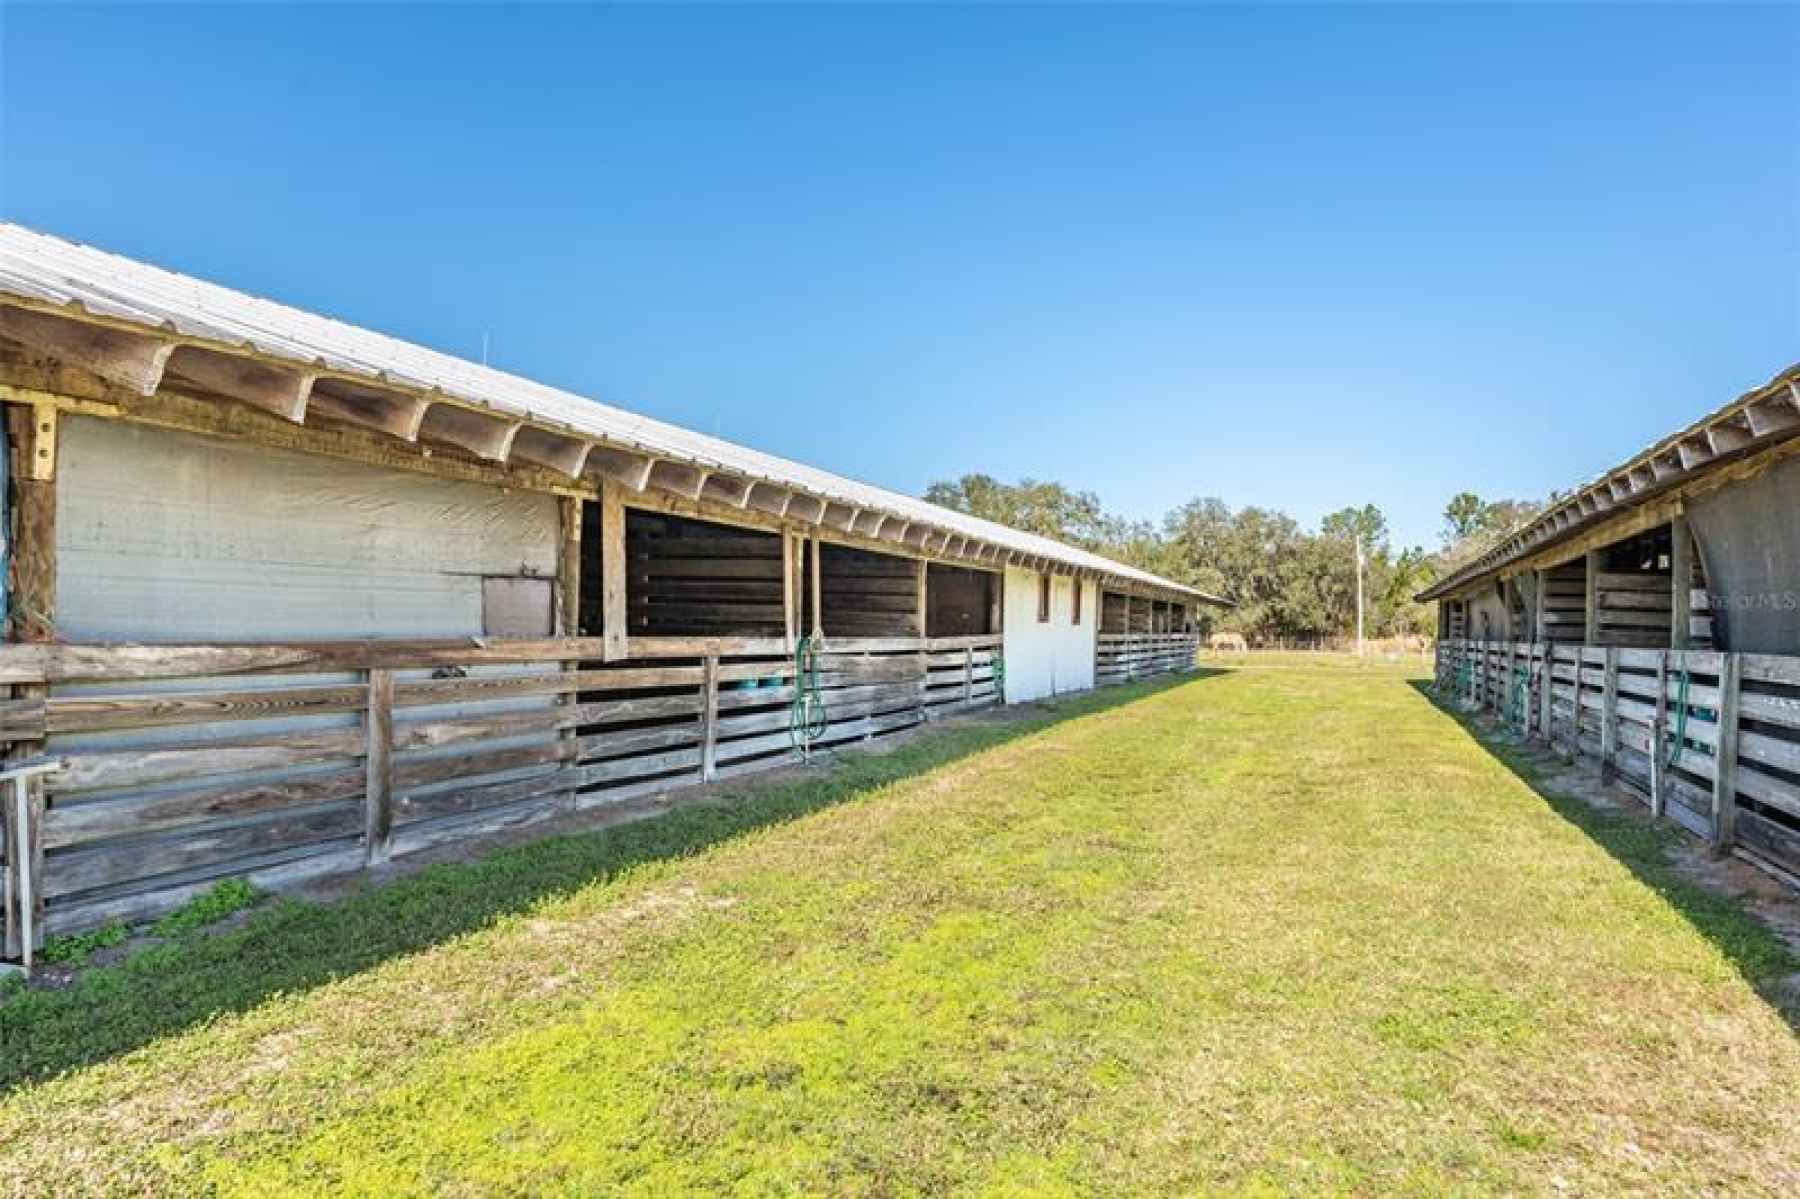 Community horse barn